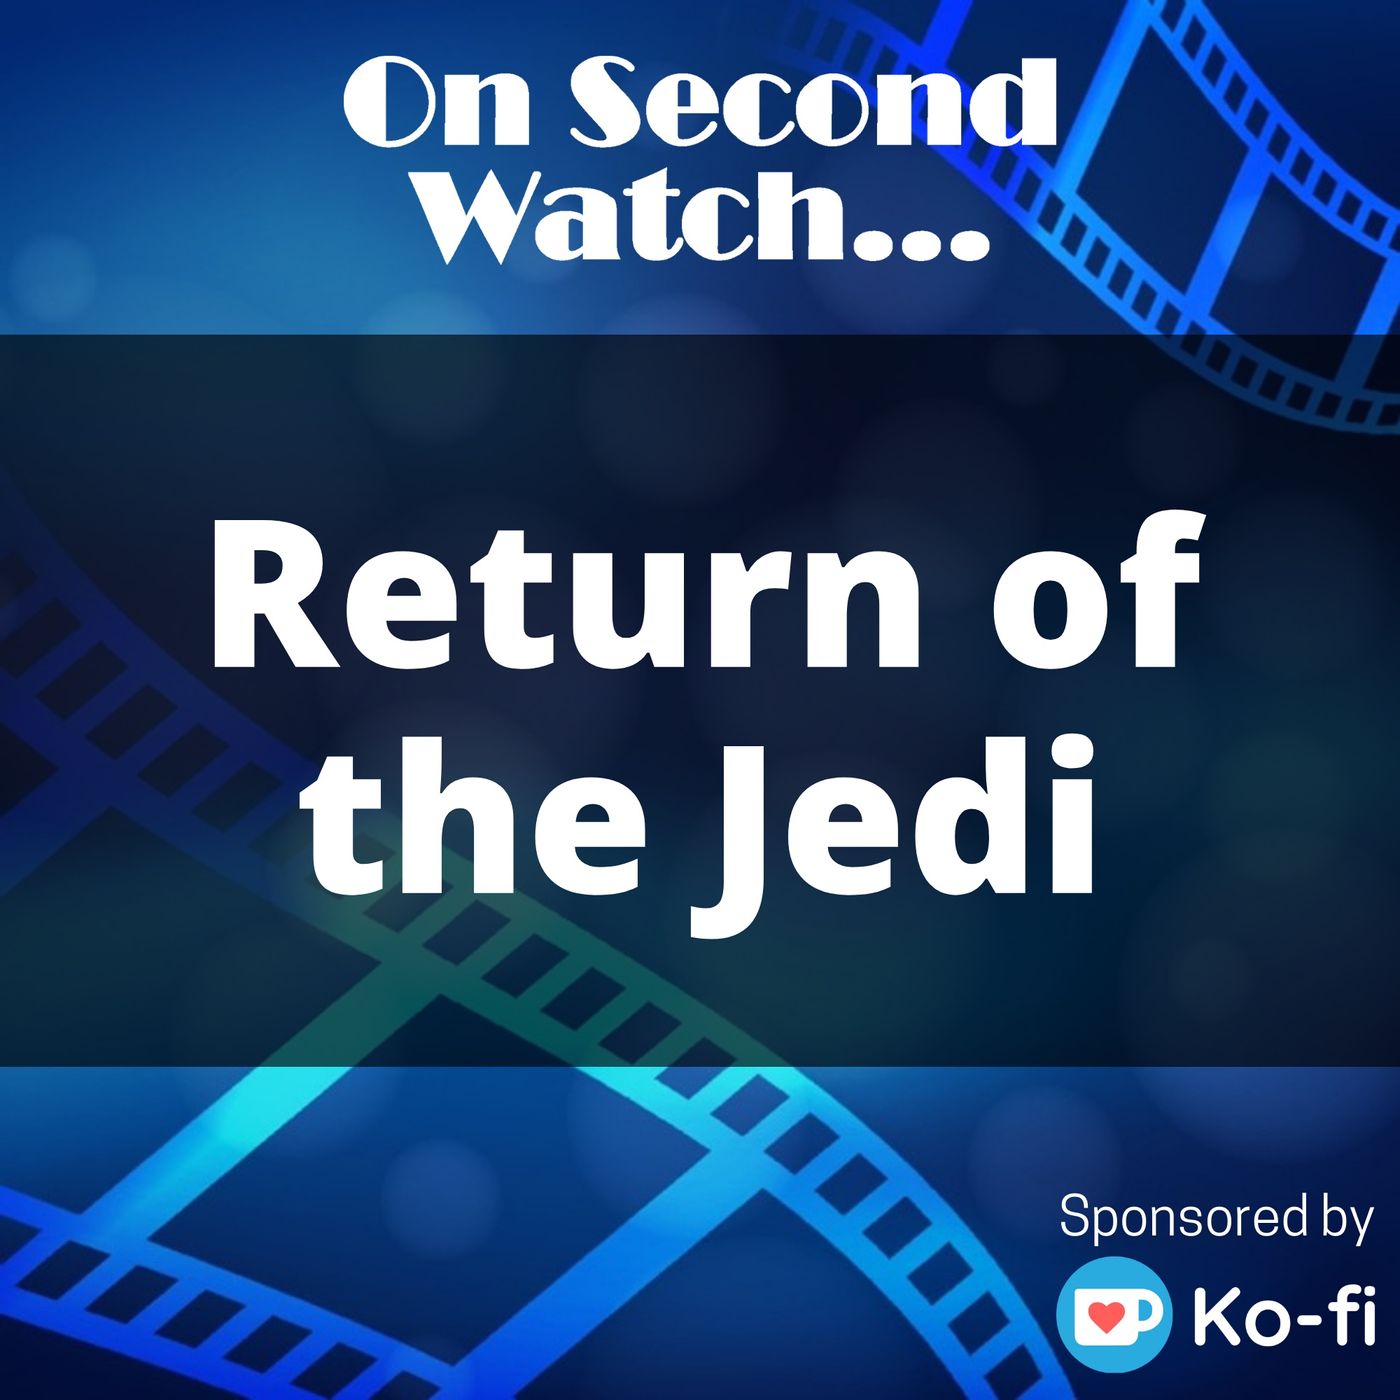 Return of the Jedi (1983) - ”It’s a trap!”